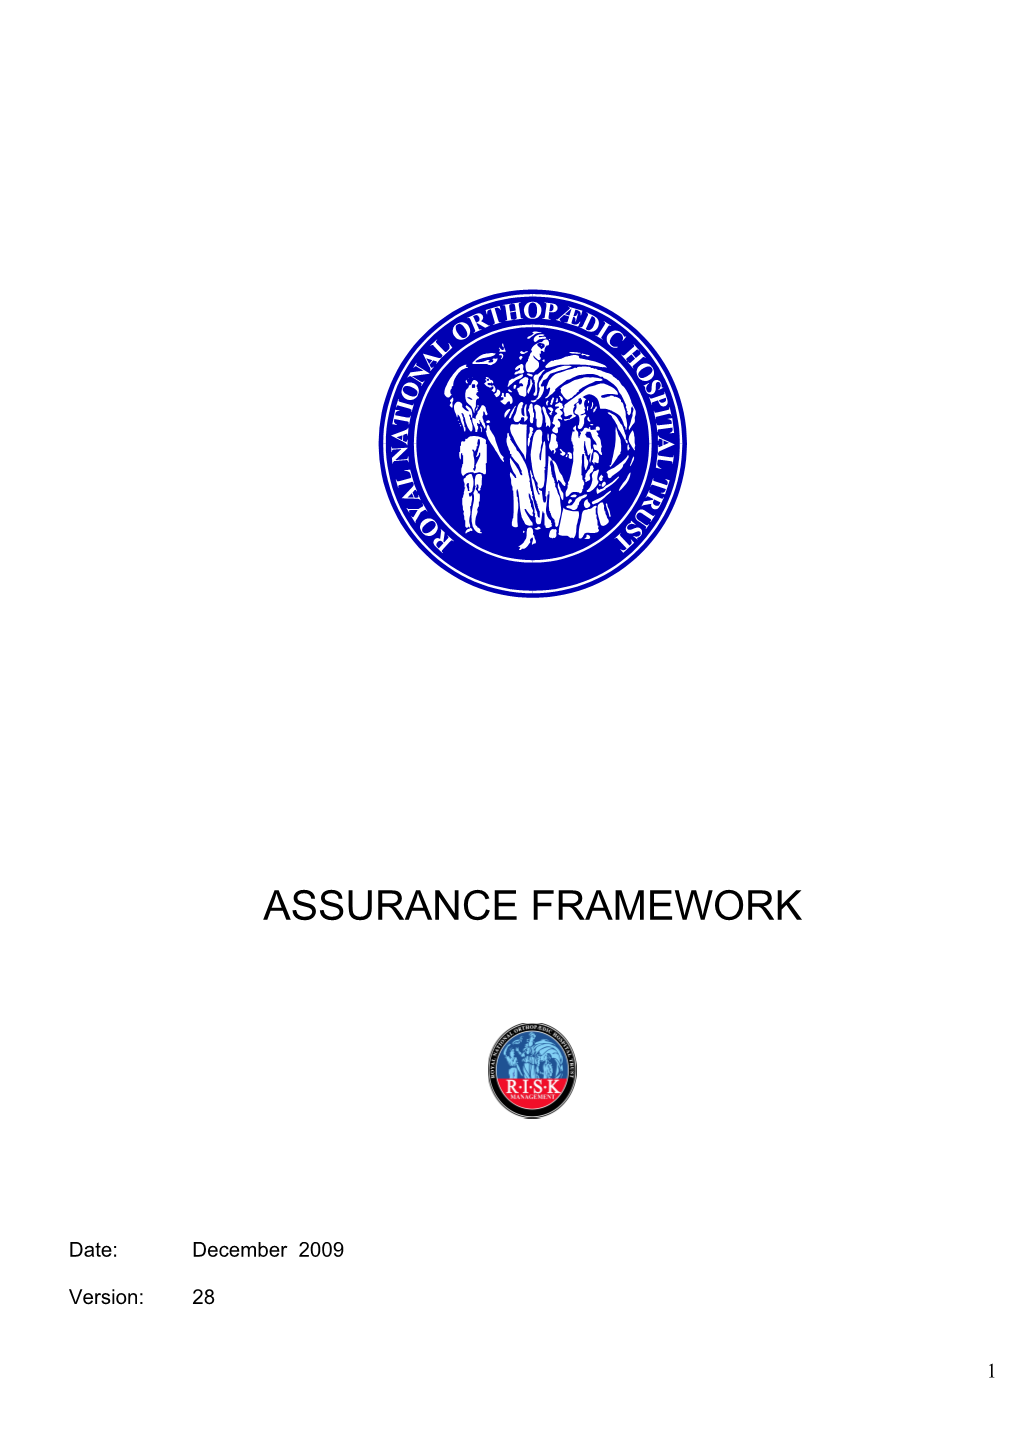 1.0The Assurance Framework - Background